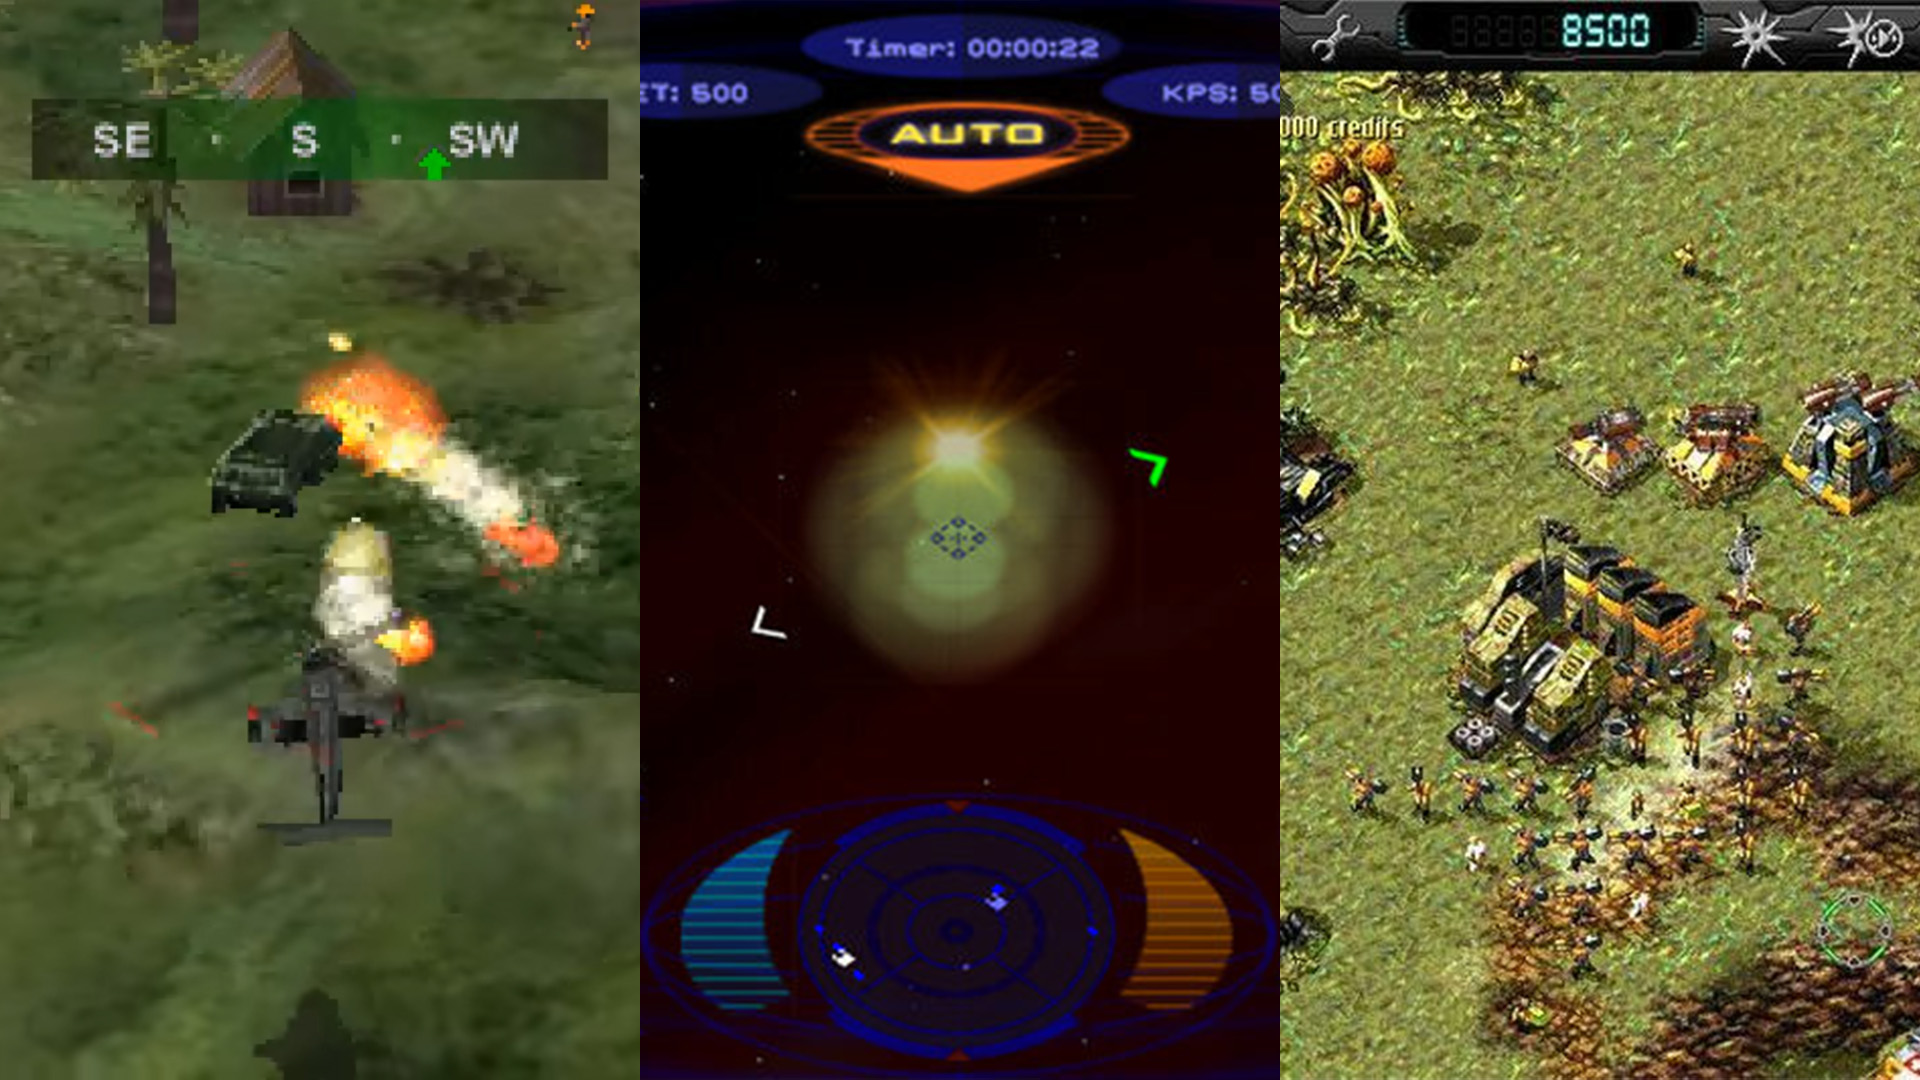 Armored Core 2 (Video Game 2000) - IMDb